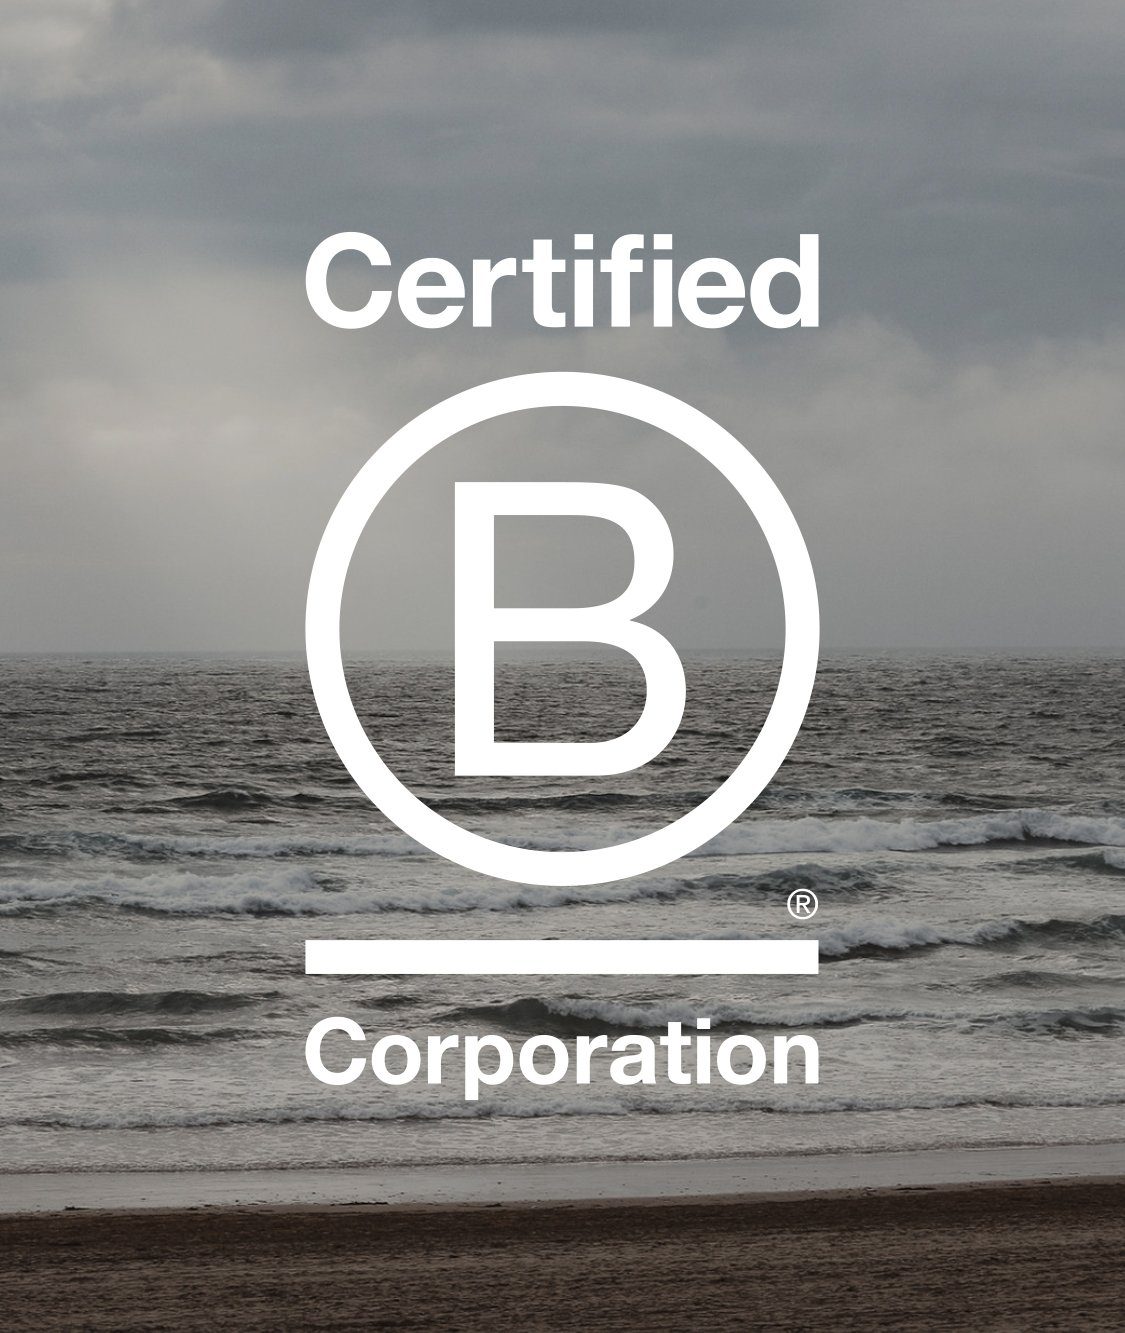 B corp logo over cornish sea image by Kingdom & Sparrow